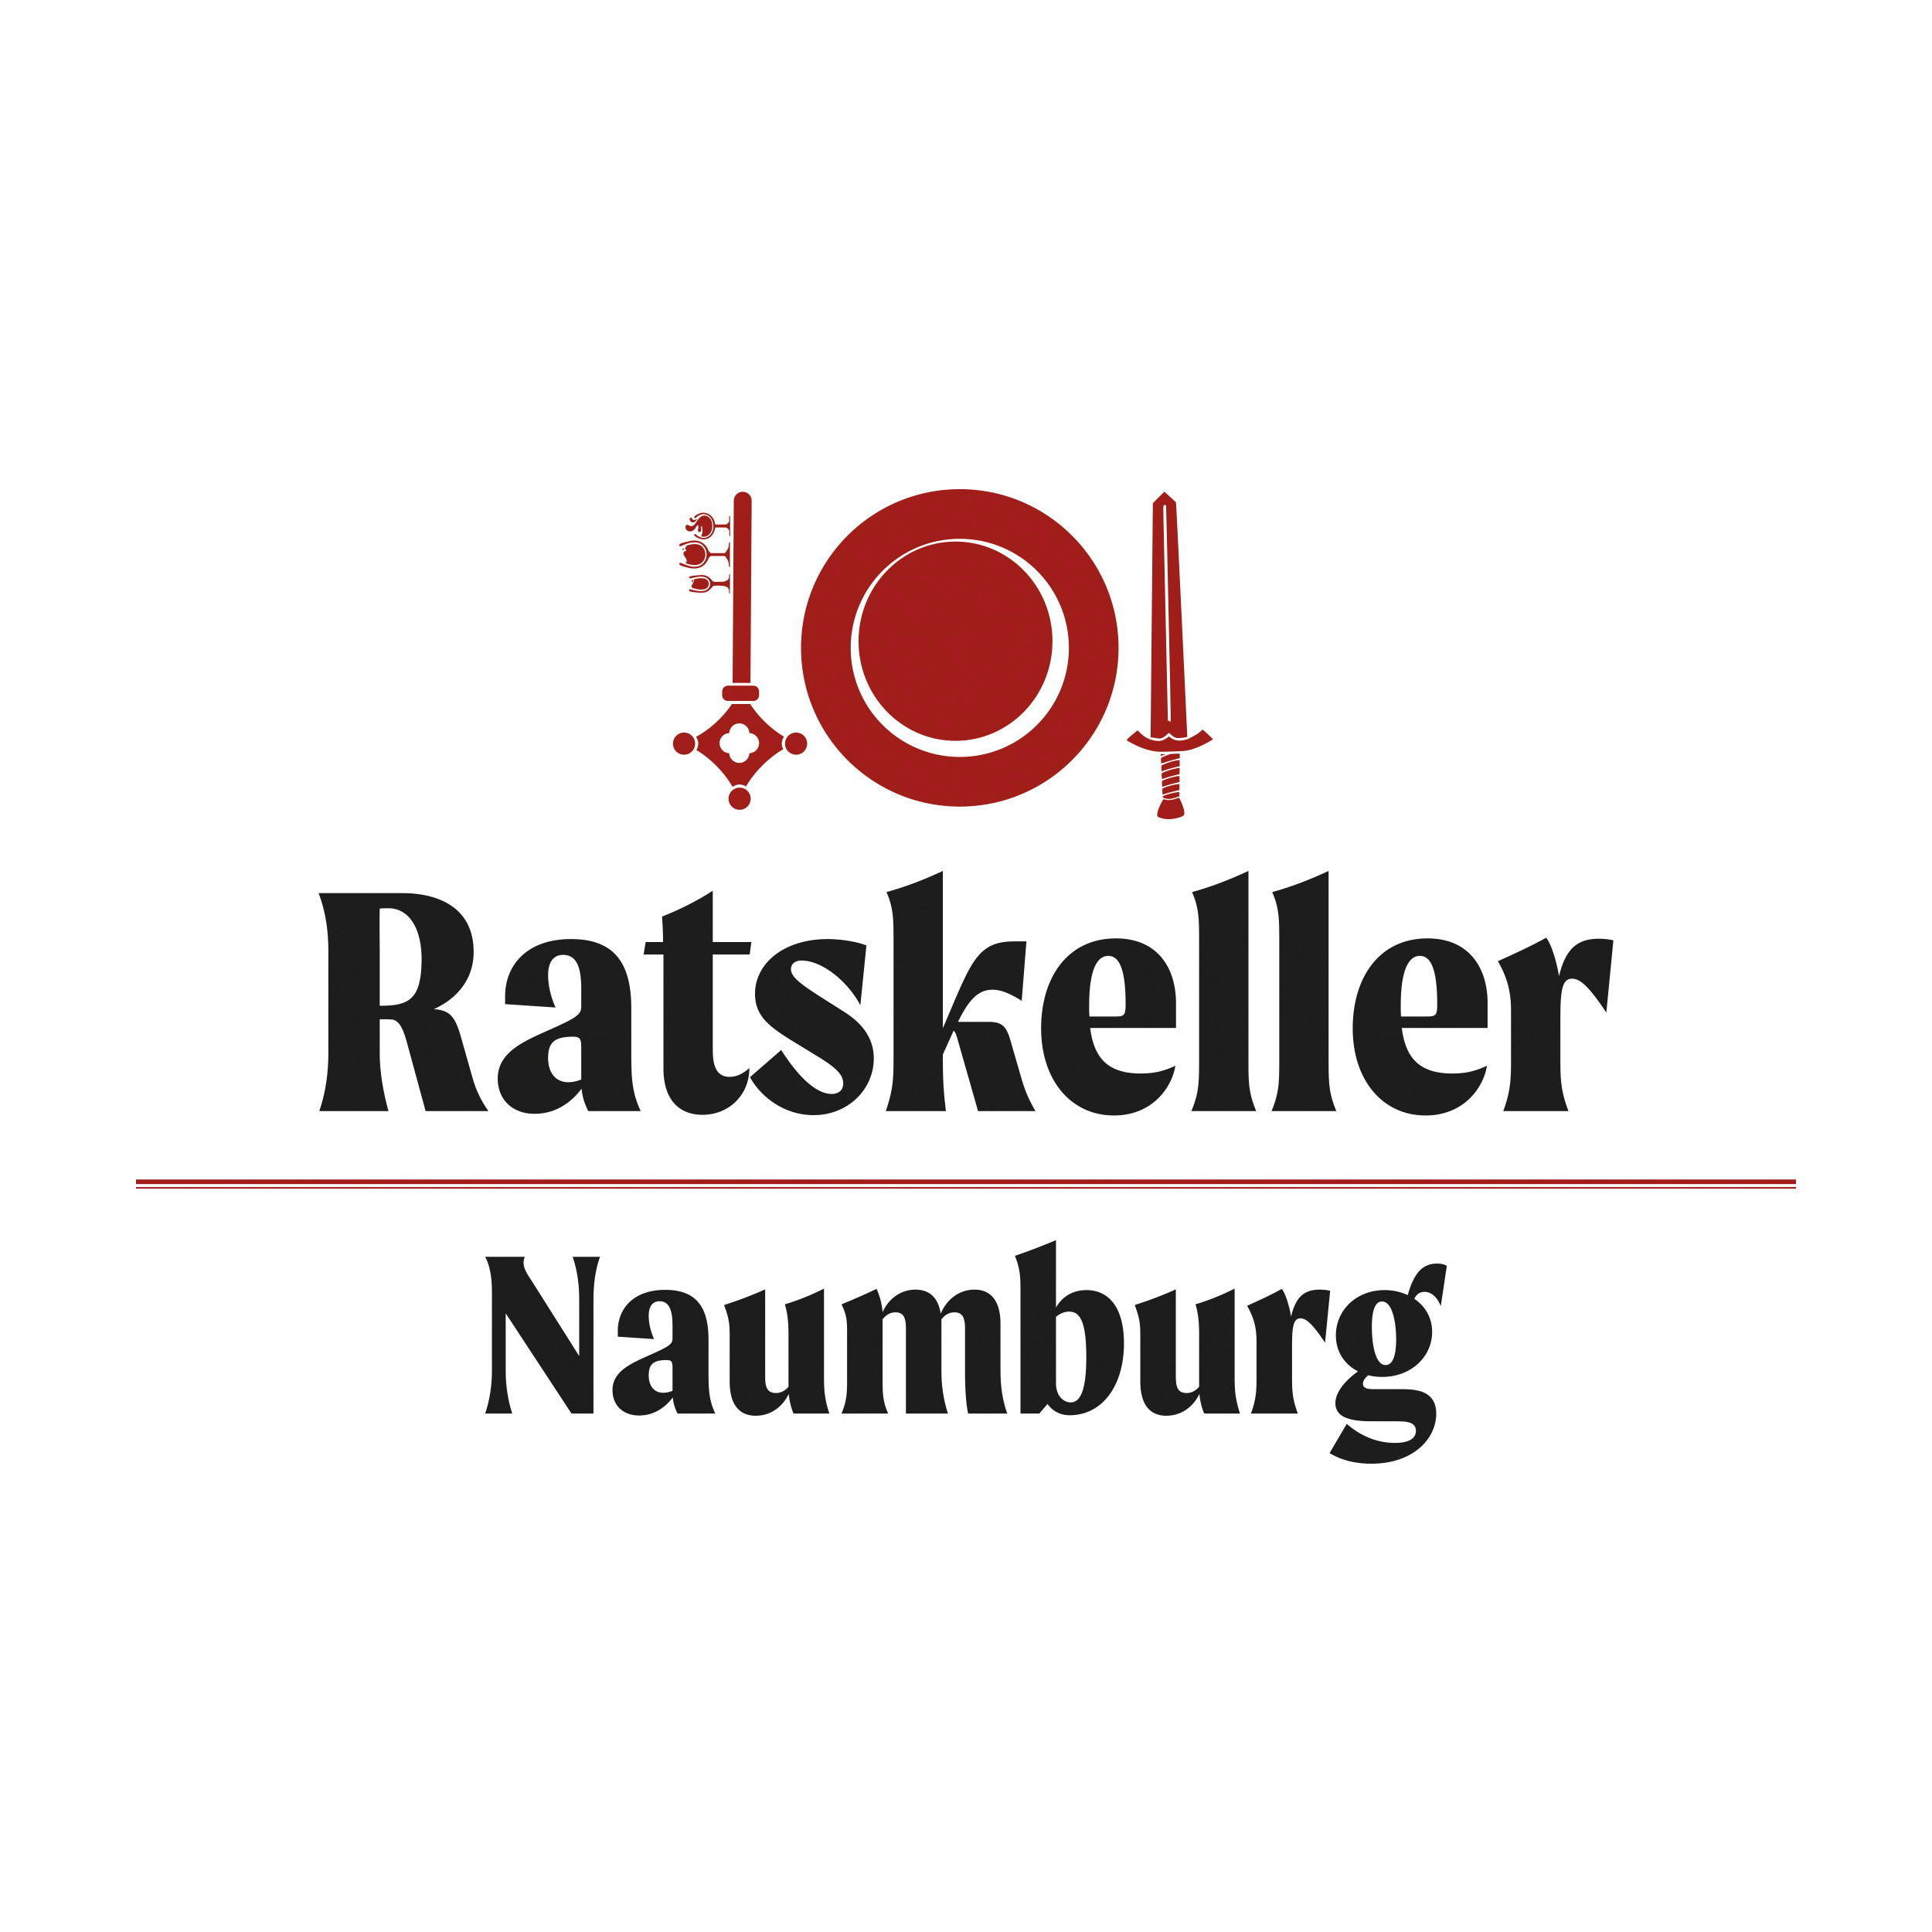 Ratskeller Naumburg  